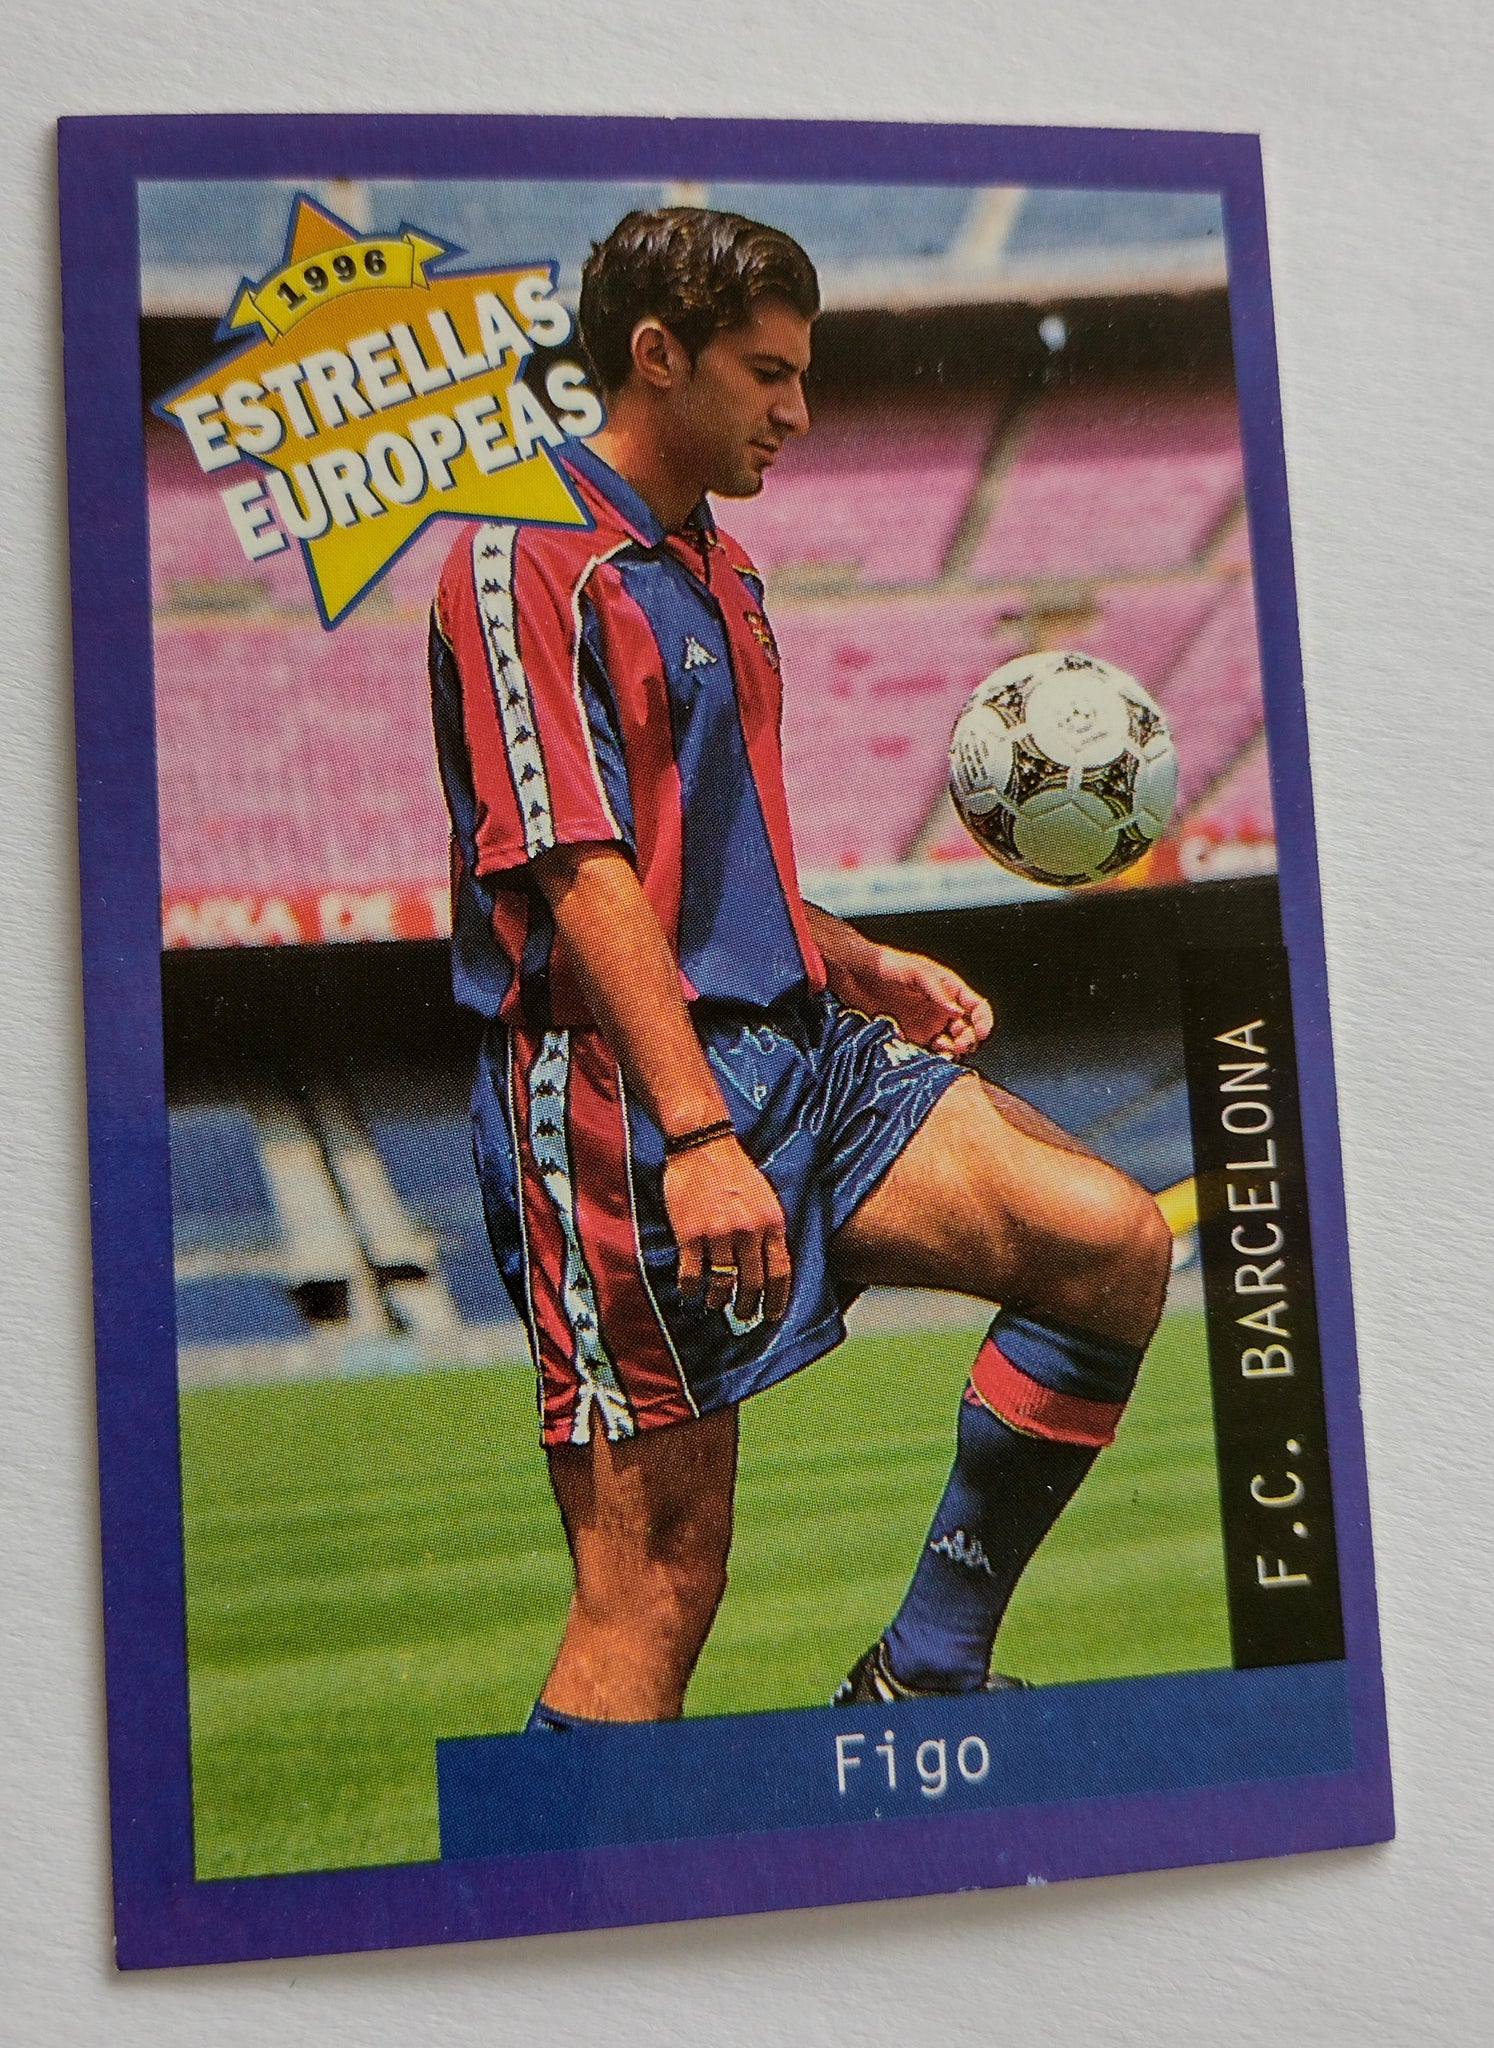 1996 Panini Estrellas Europeas Luis Figo #40 Trading Card